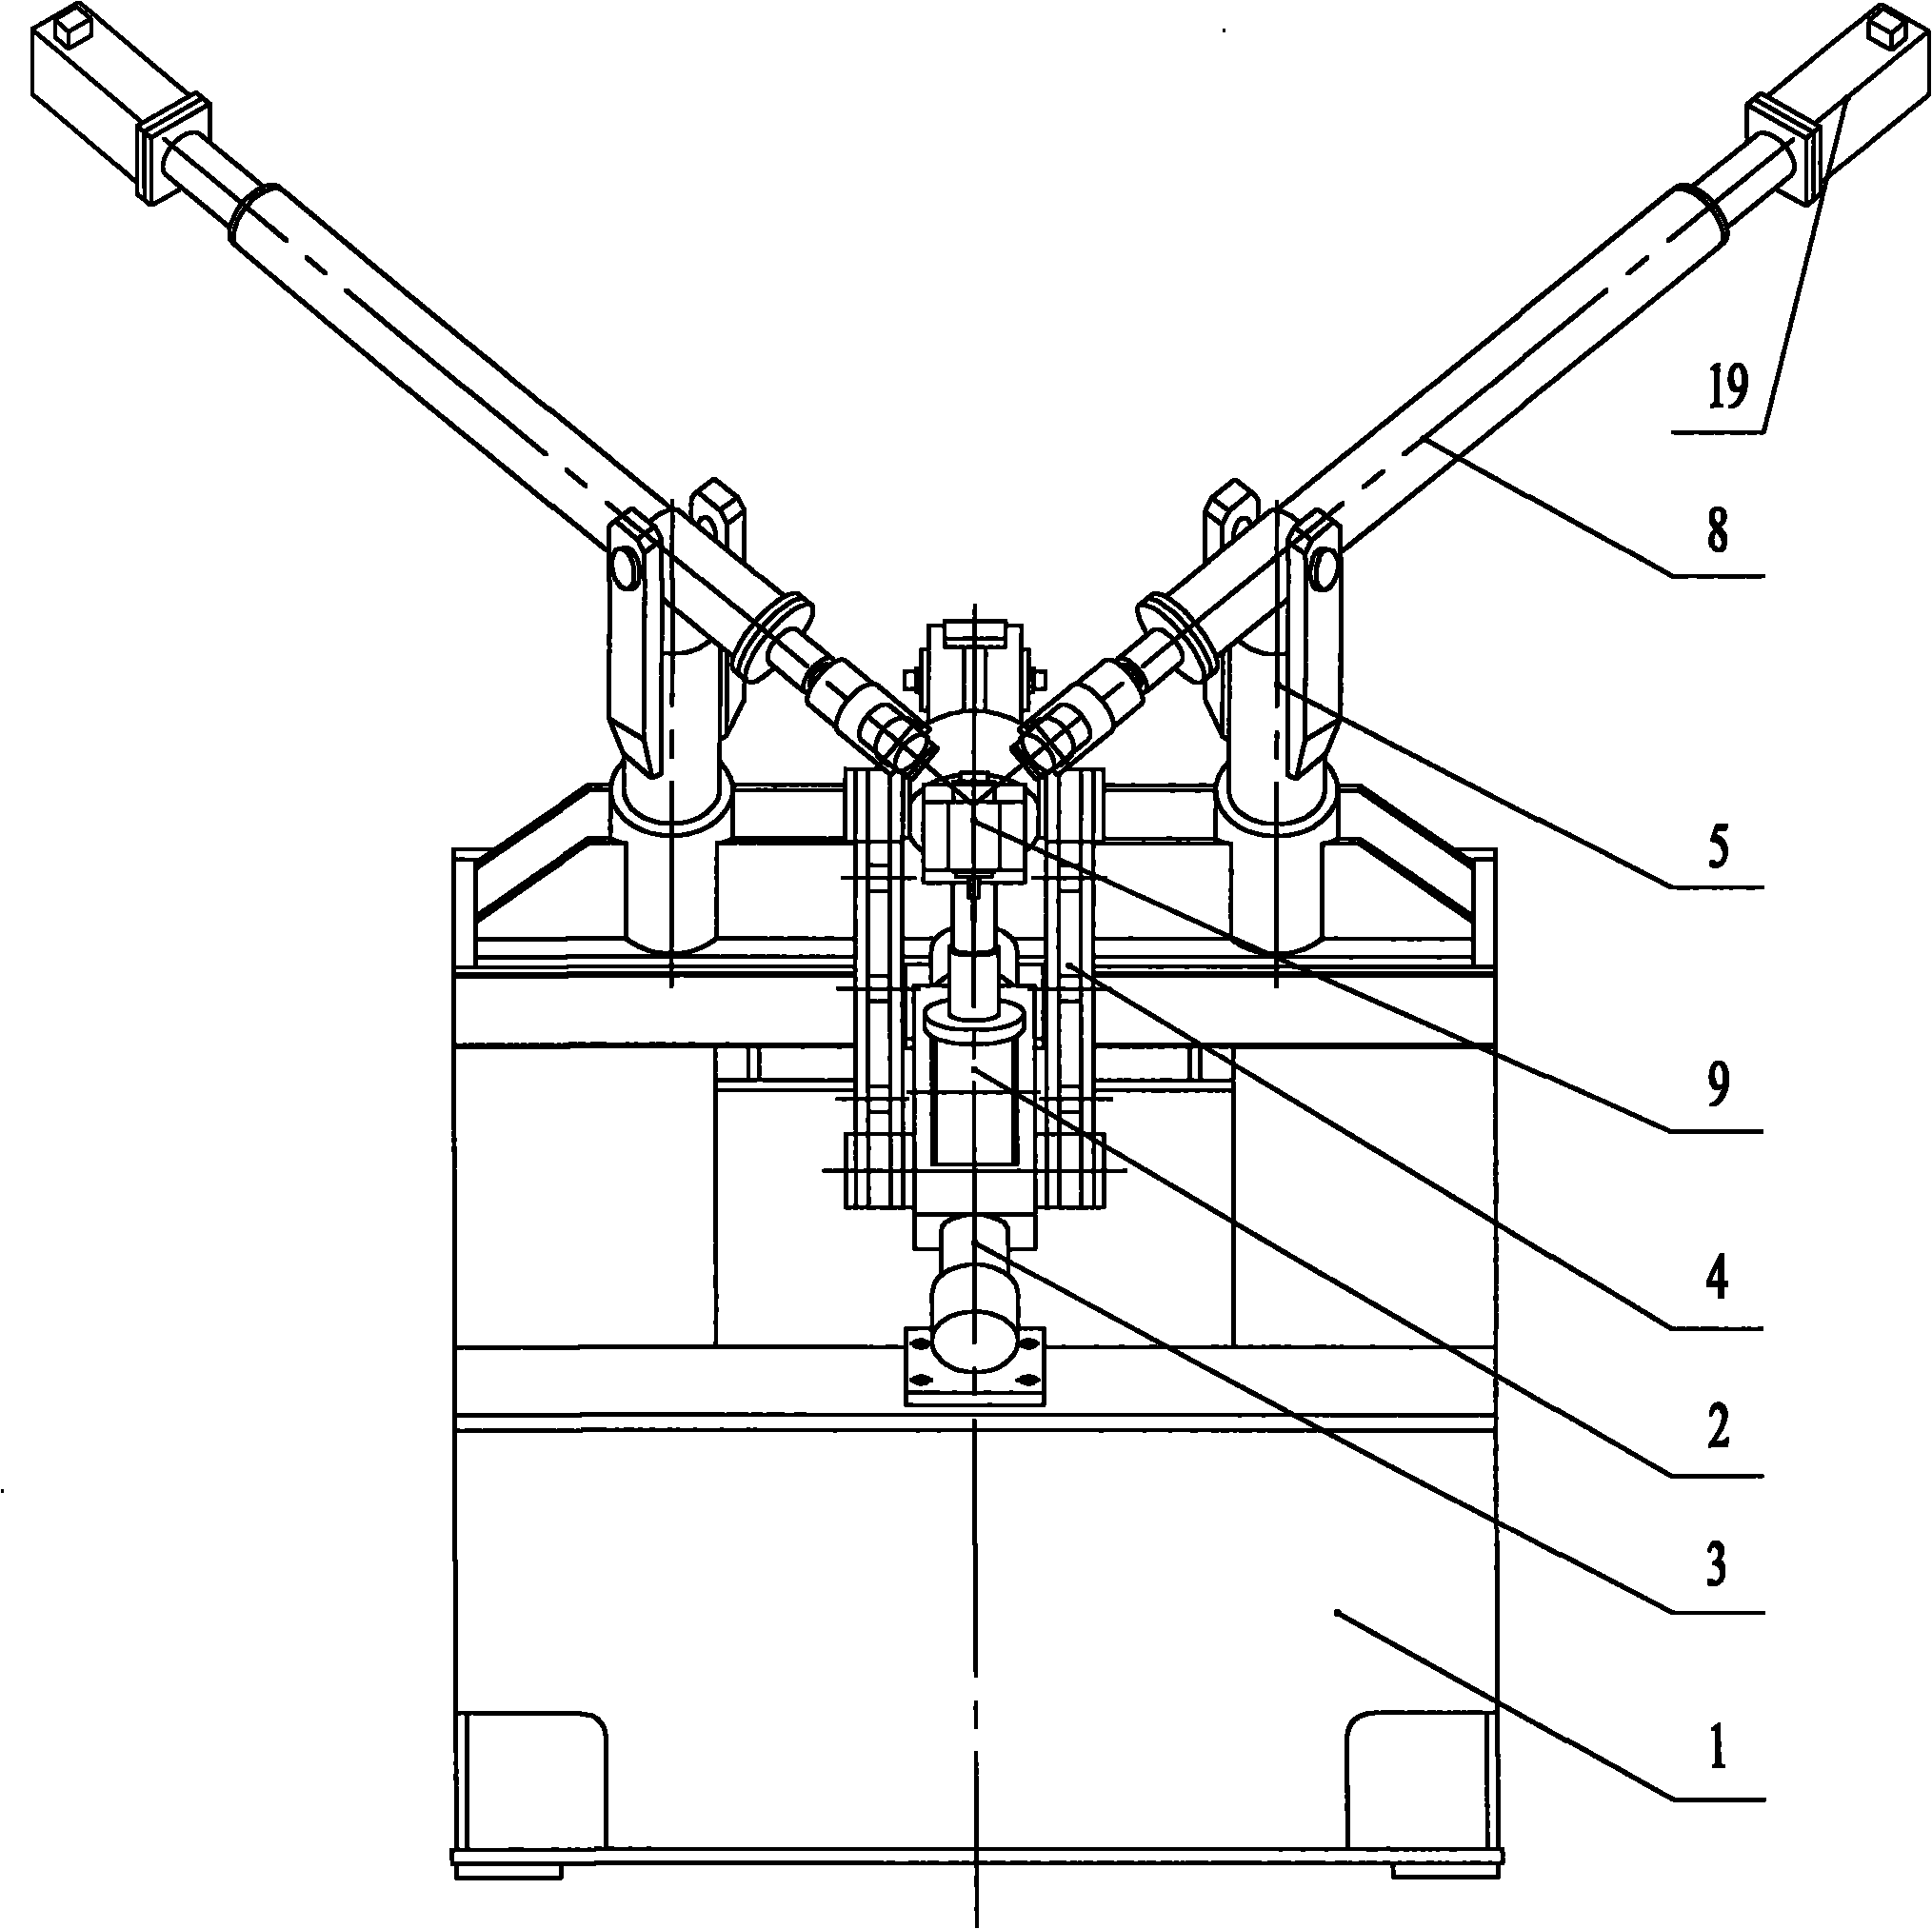 Three-chain parallel machine tool